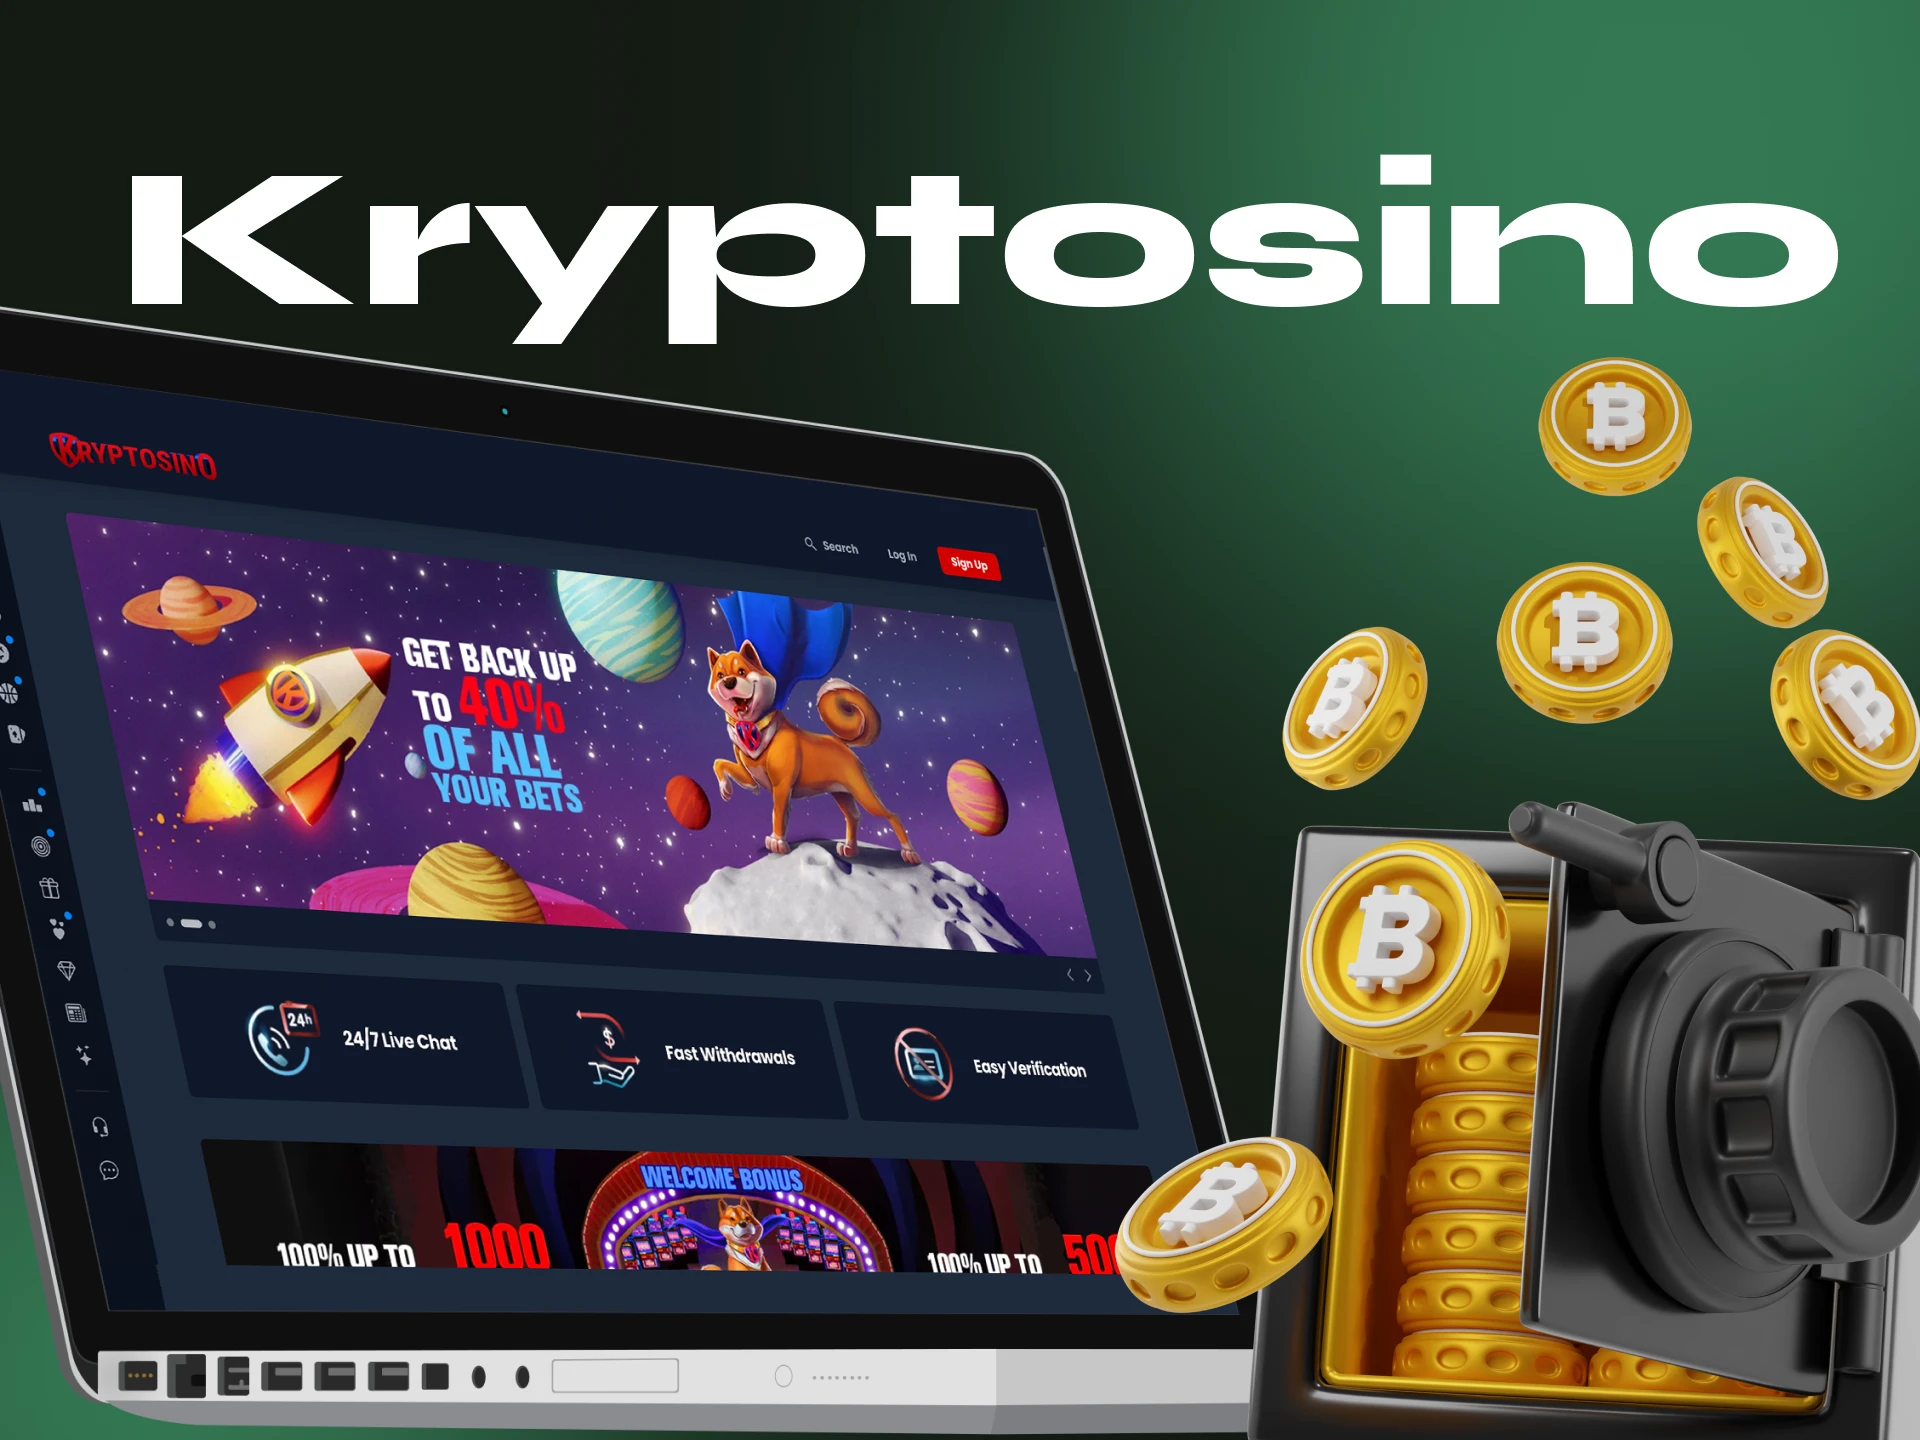 What popular cryptocurrencies does Kryptosino casino support.